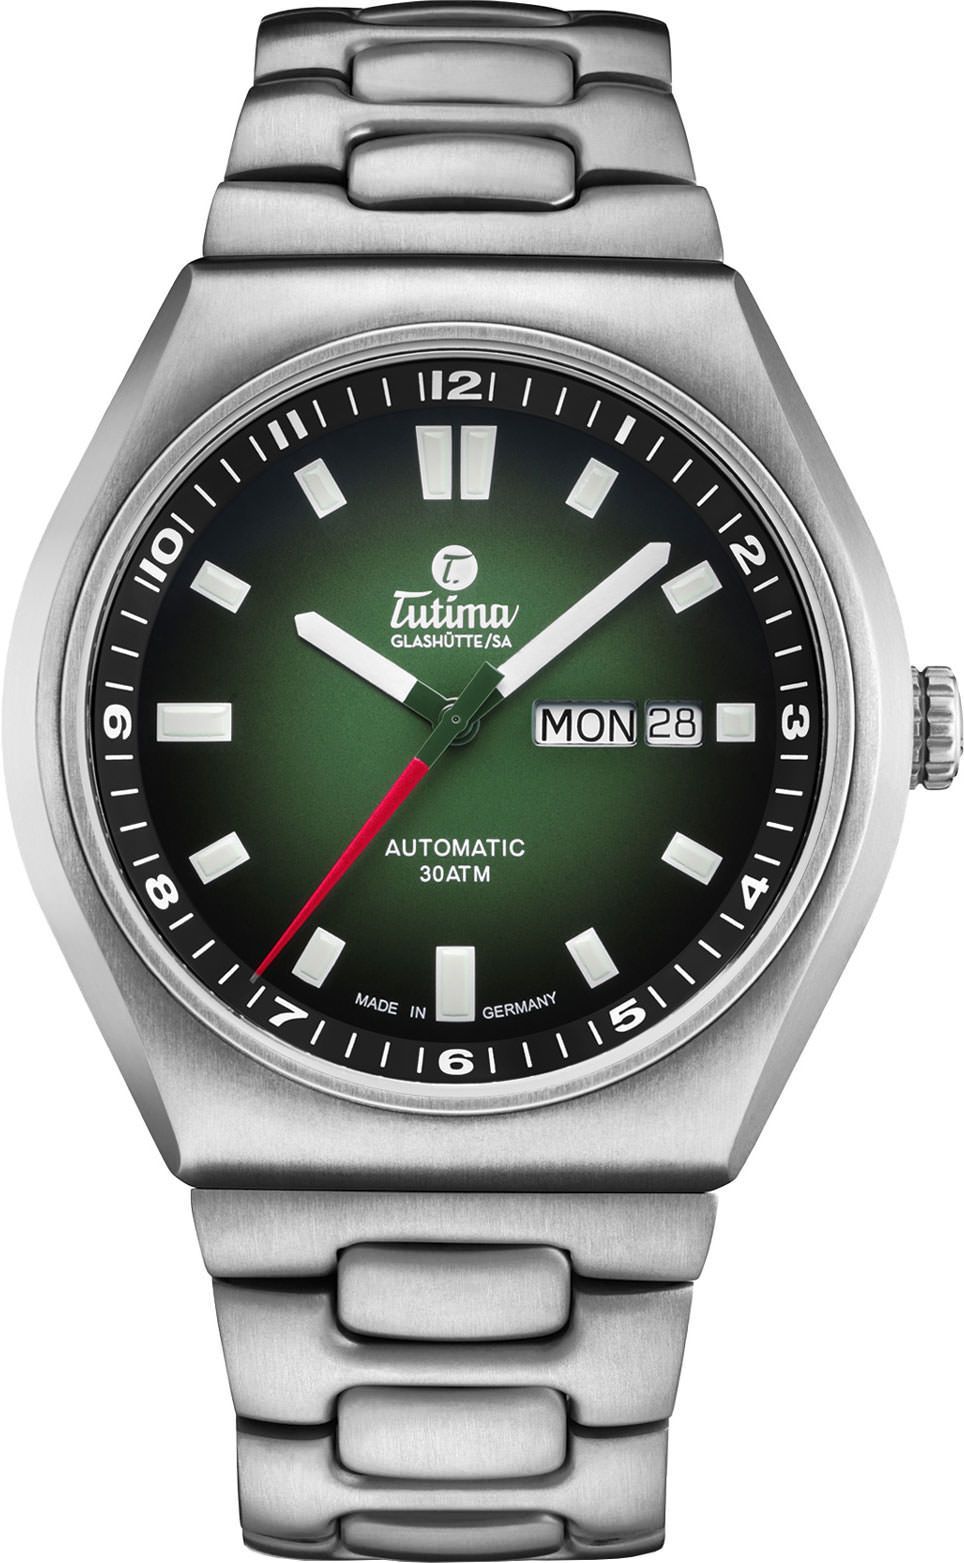 Tutima Glashütte Coastline 43 mm Watch in Green Dial For Men - 1